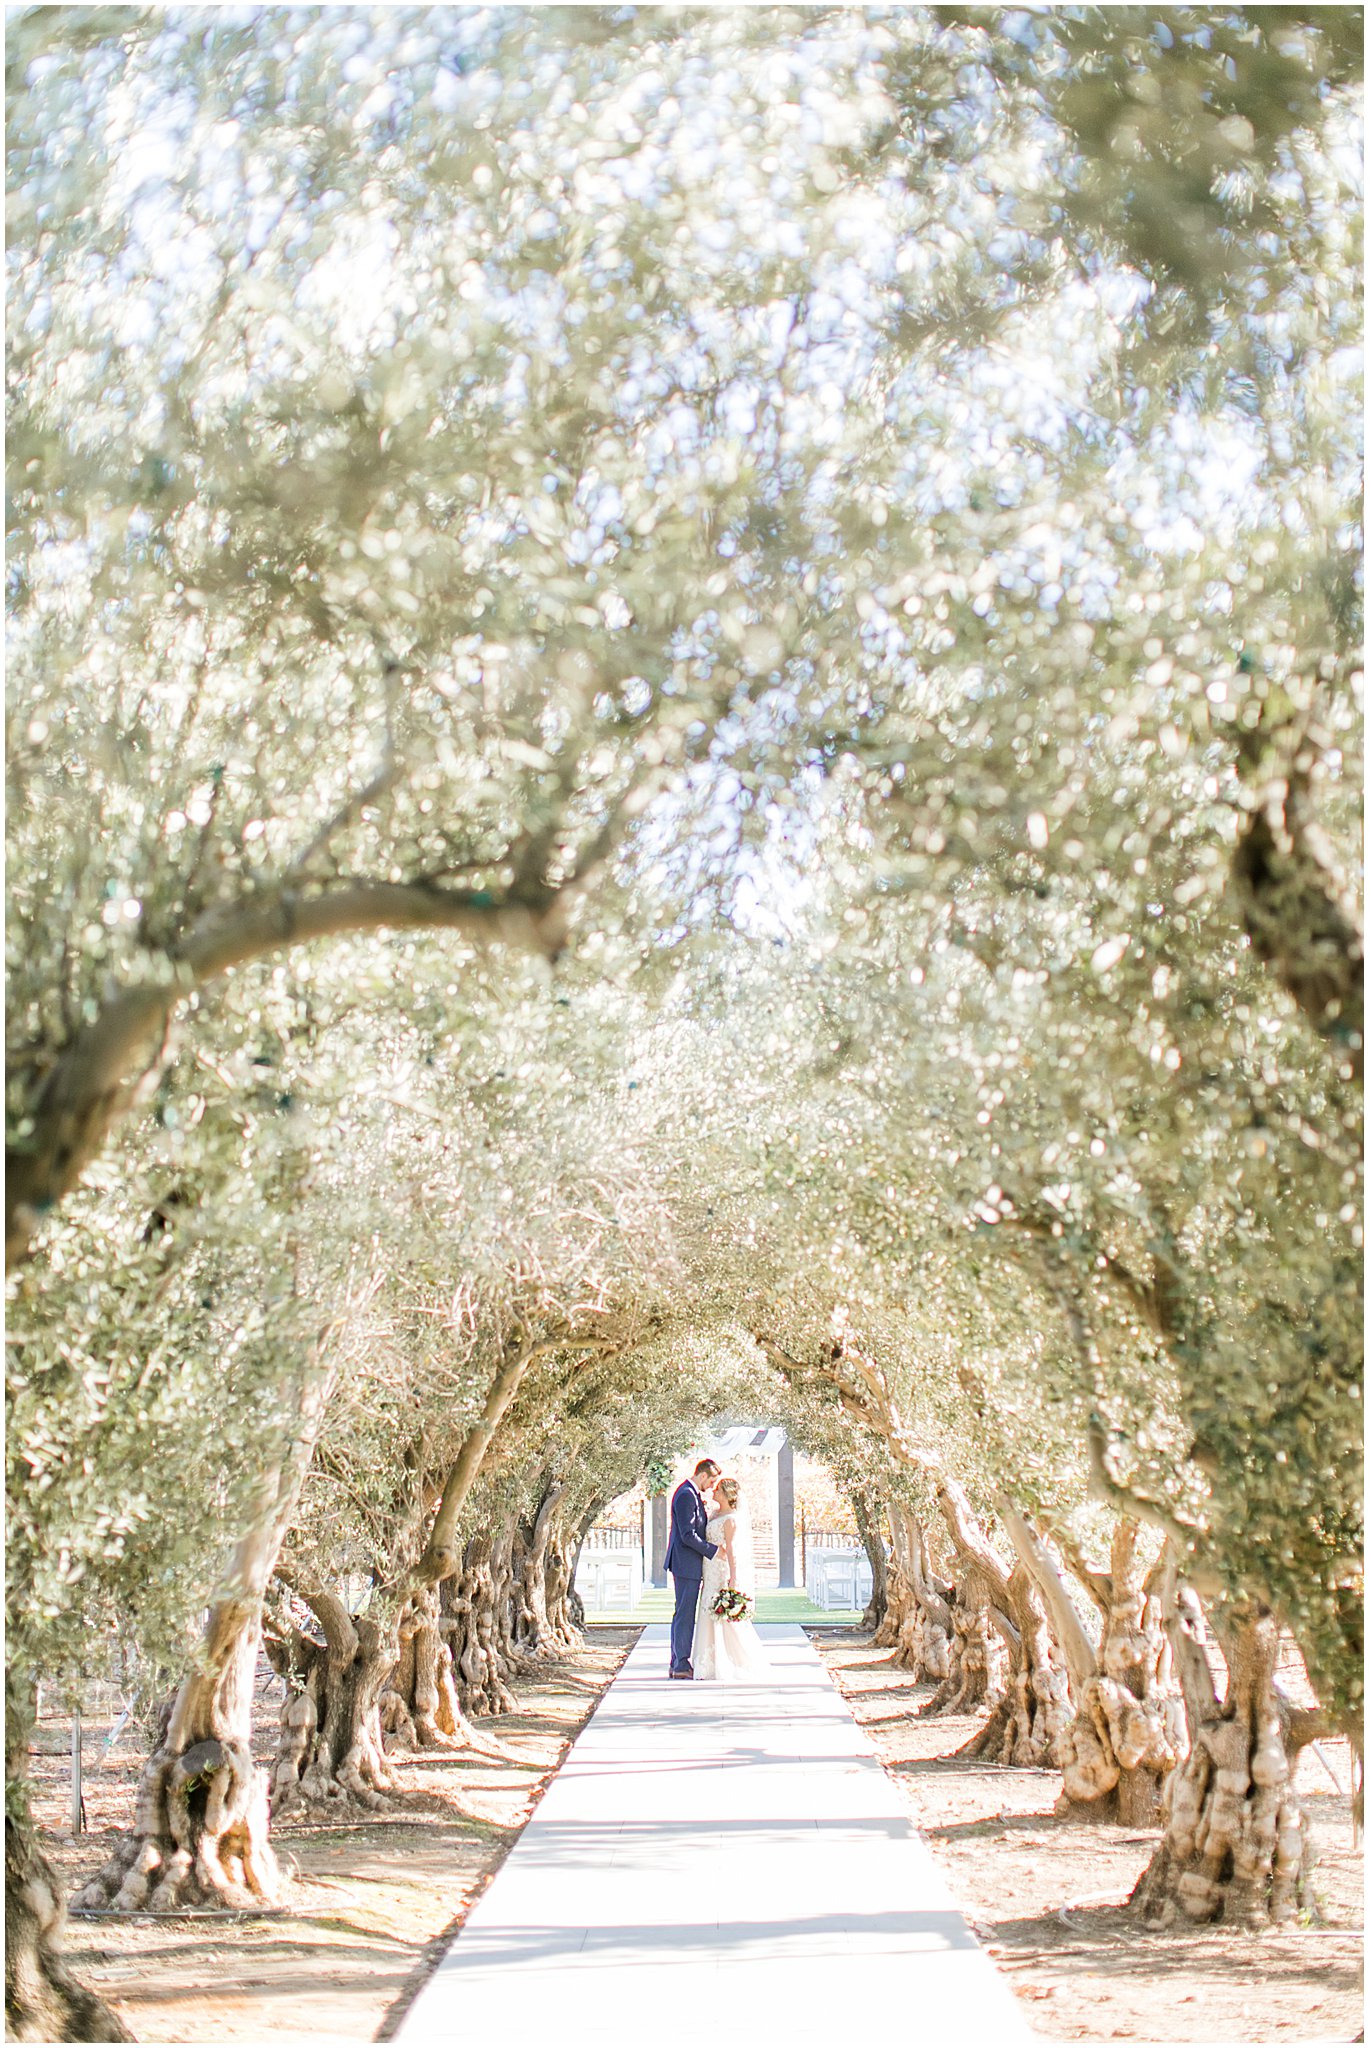 Sycamore Creek Vineyards Wedding - Live Love Leal - Fall Wedding - Bay Area Wedding Photographer - Angela Sue Photography_0043.jpg